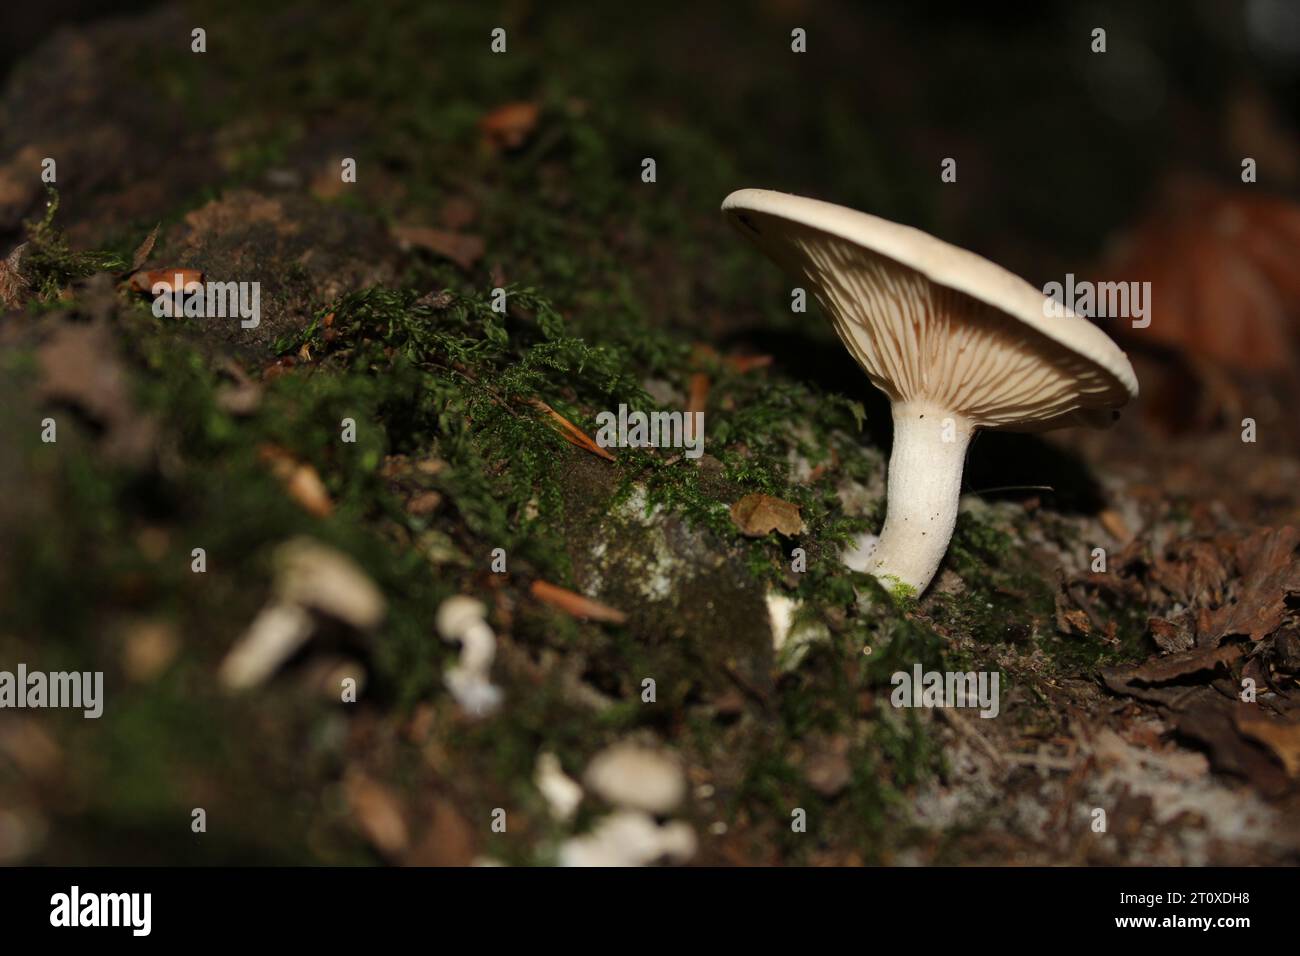 Fleecy Milkcap (Lactarius vellereus) in British woodland, moss Stock Photo